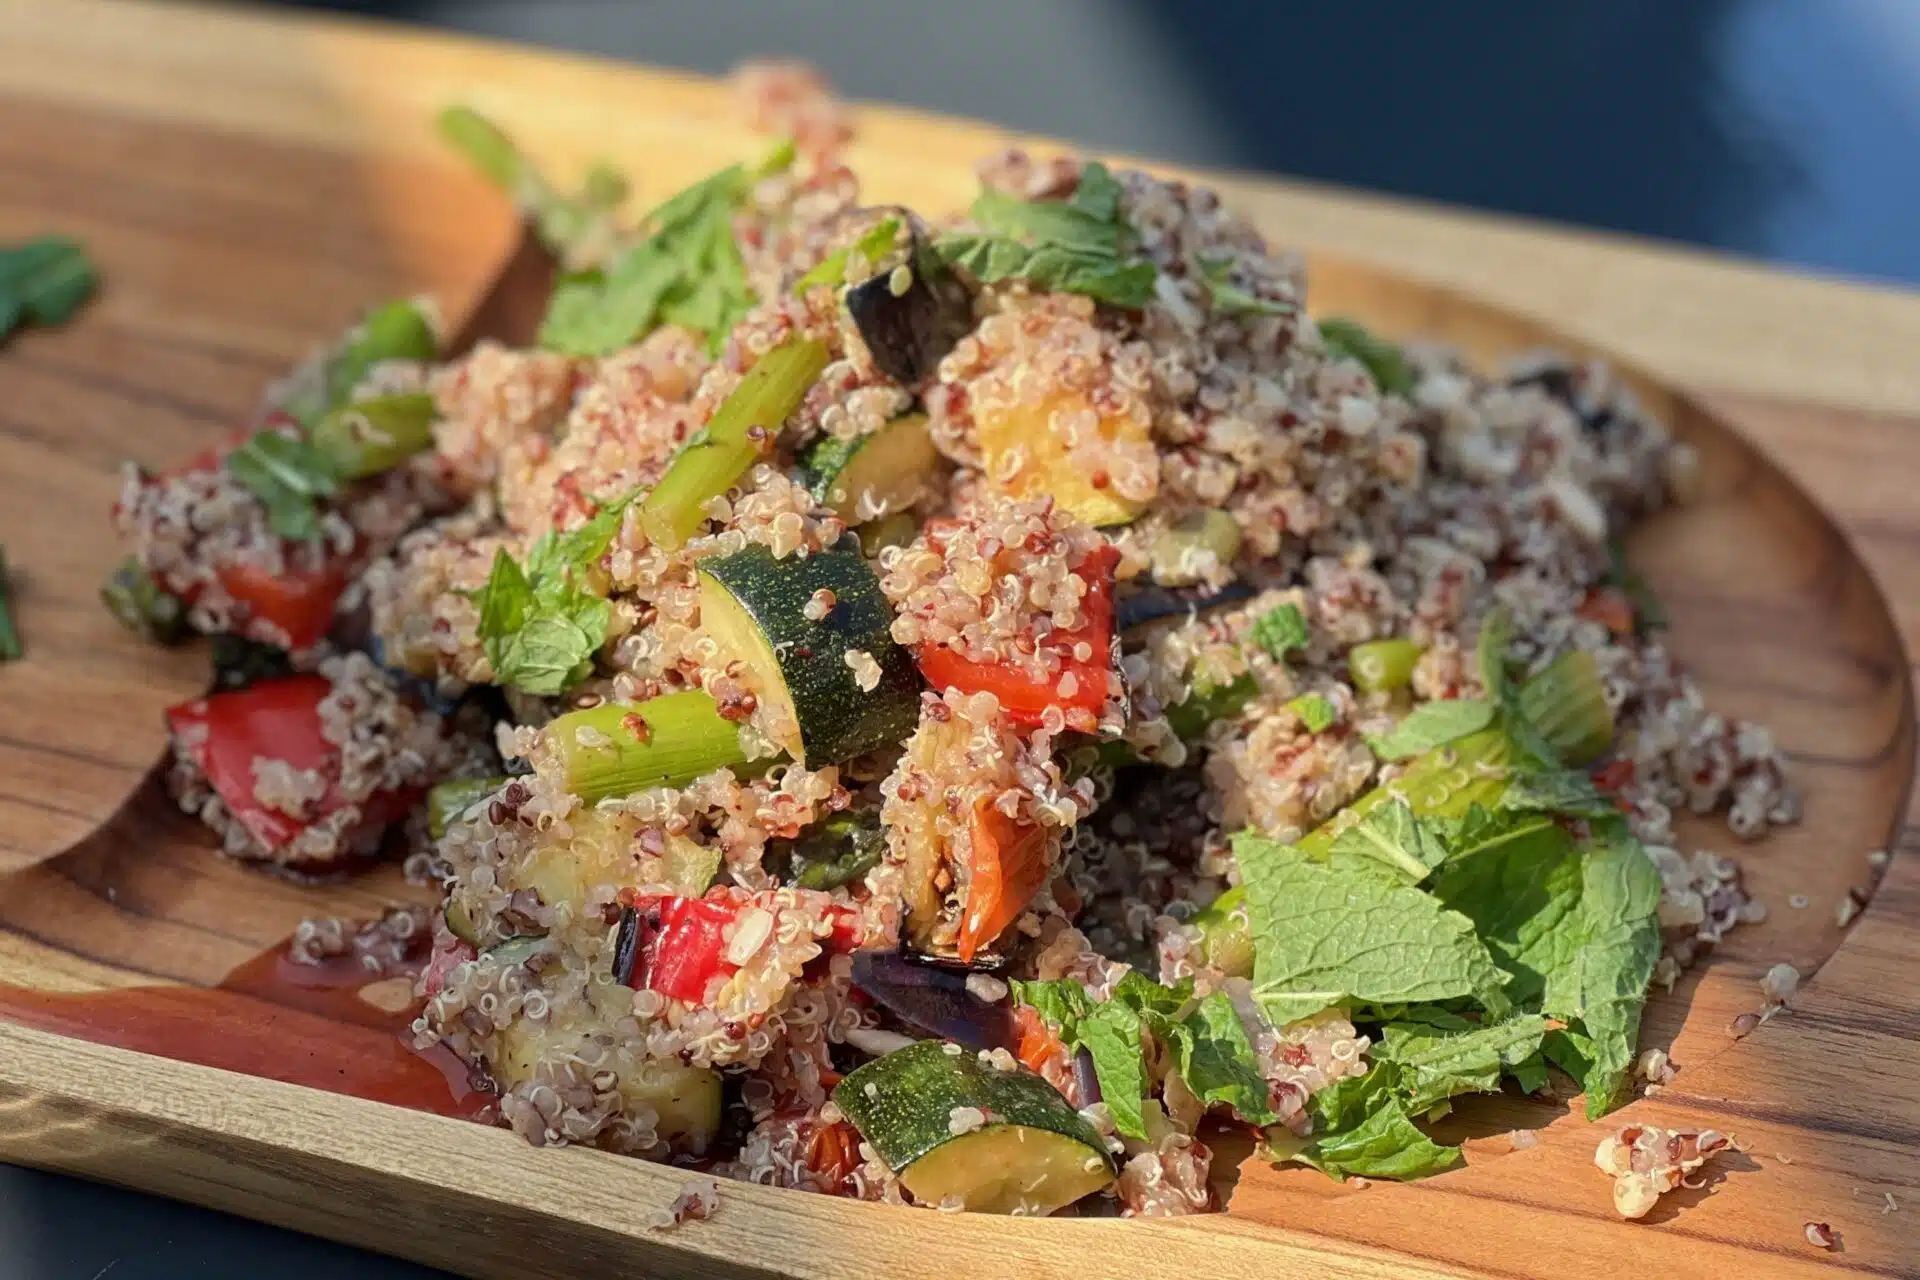 Roasted veg quinoa